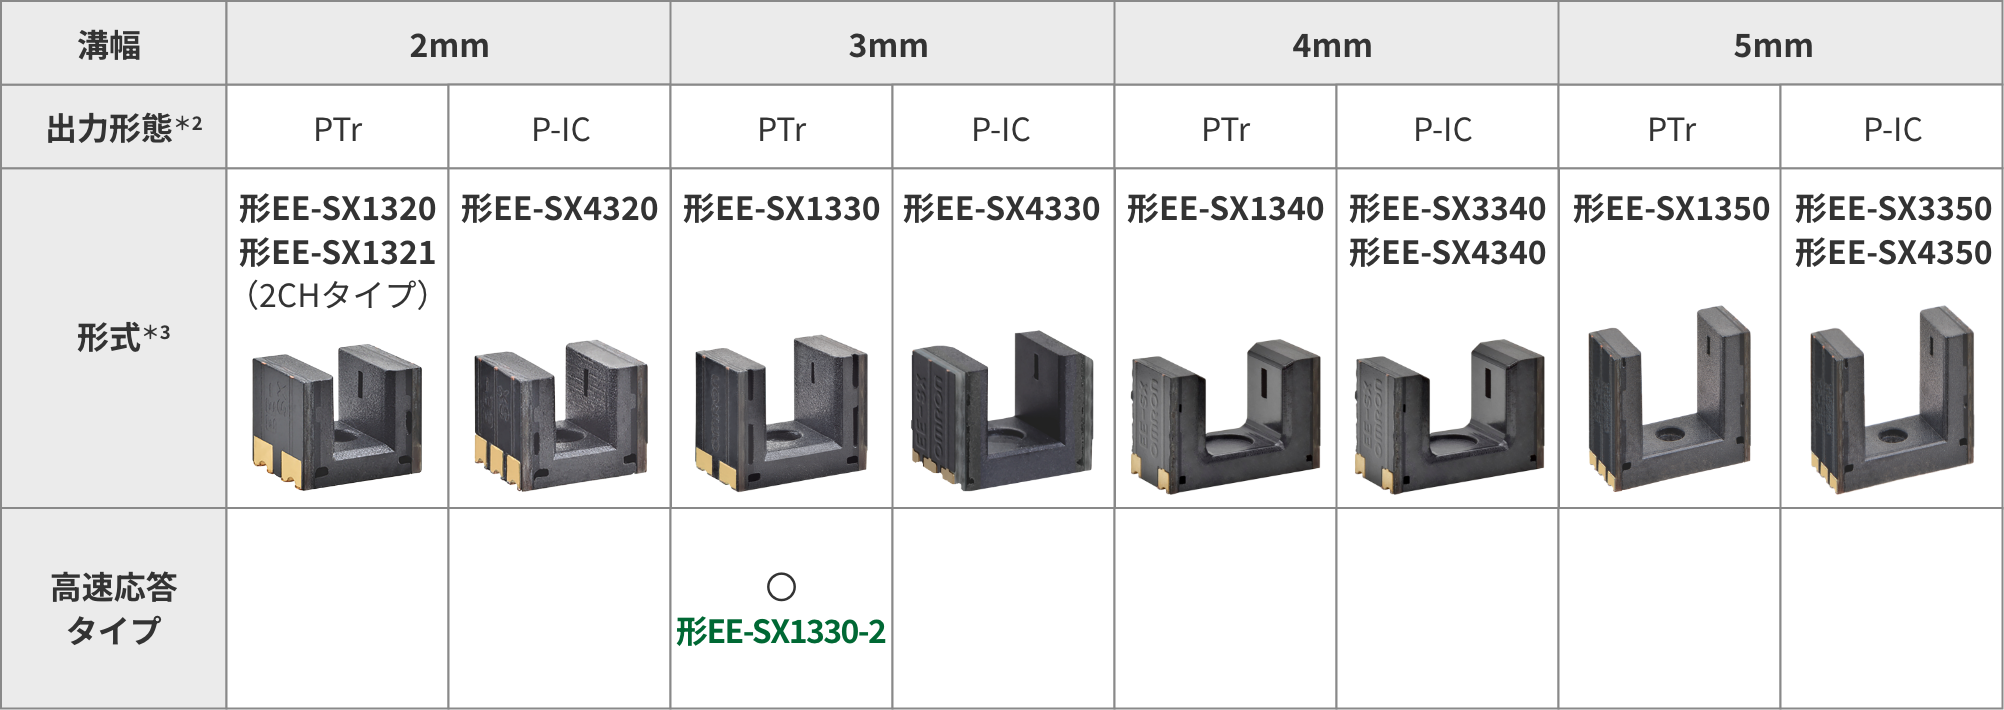 溝幅：3mm、出力形態＊2：PTr、形式＊3：形EE-SX1330、高速応答タイプ：〇形EE-SX1330-2